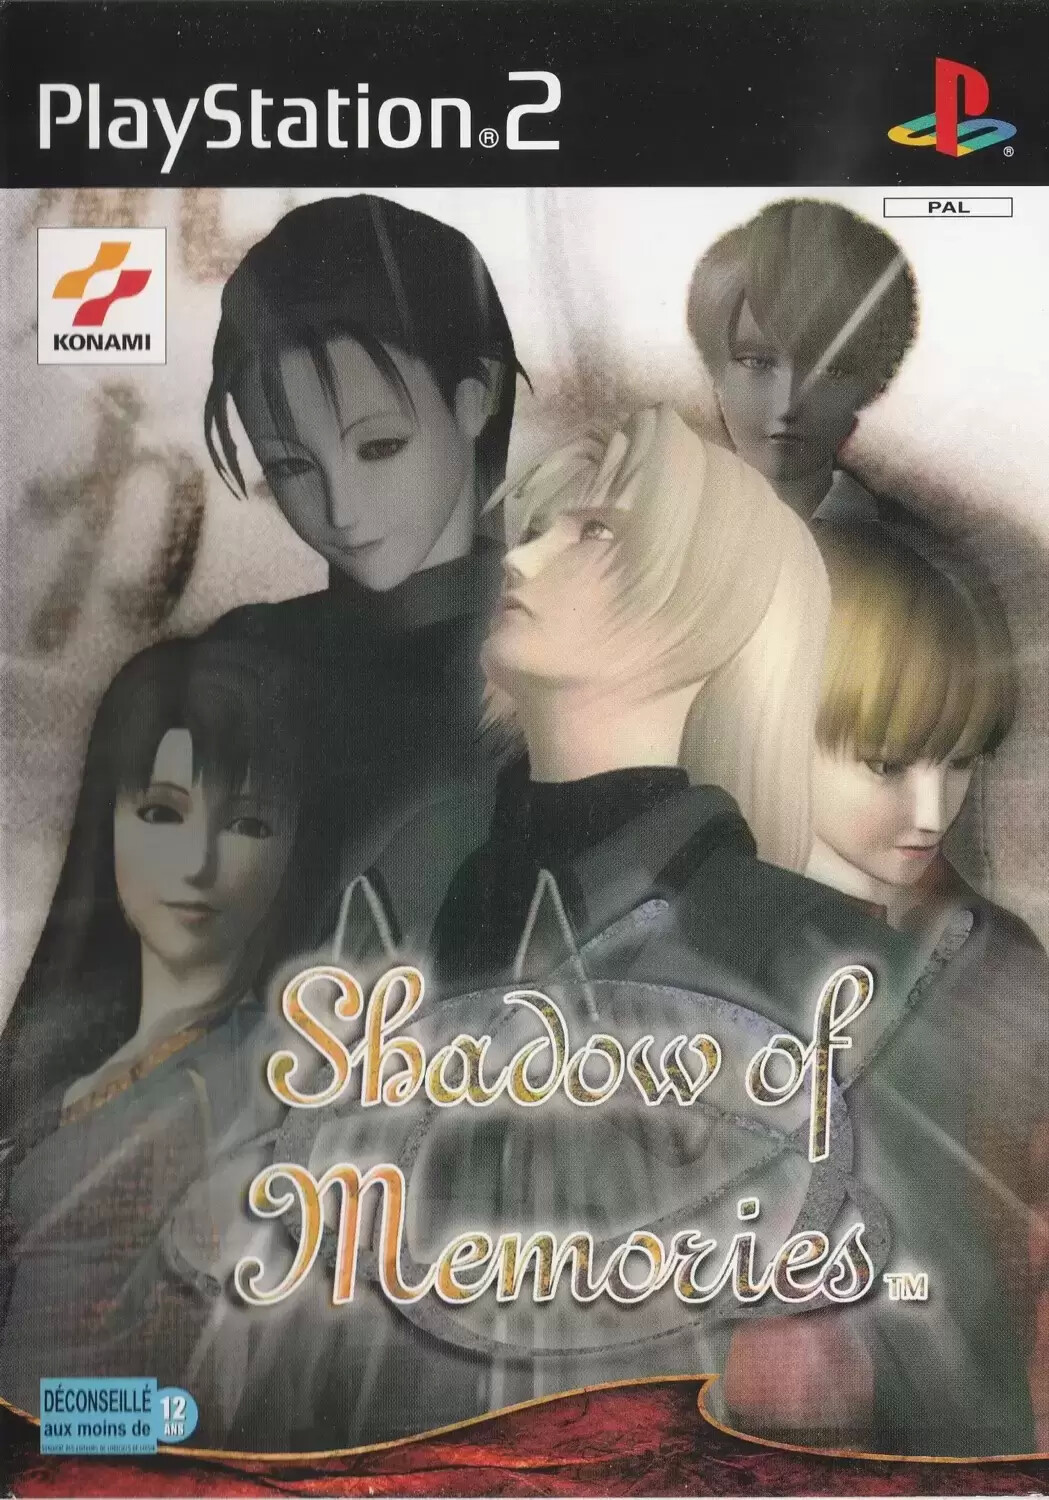 PS2 Games - Shadow of Memories